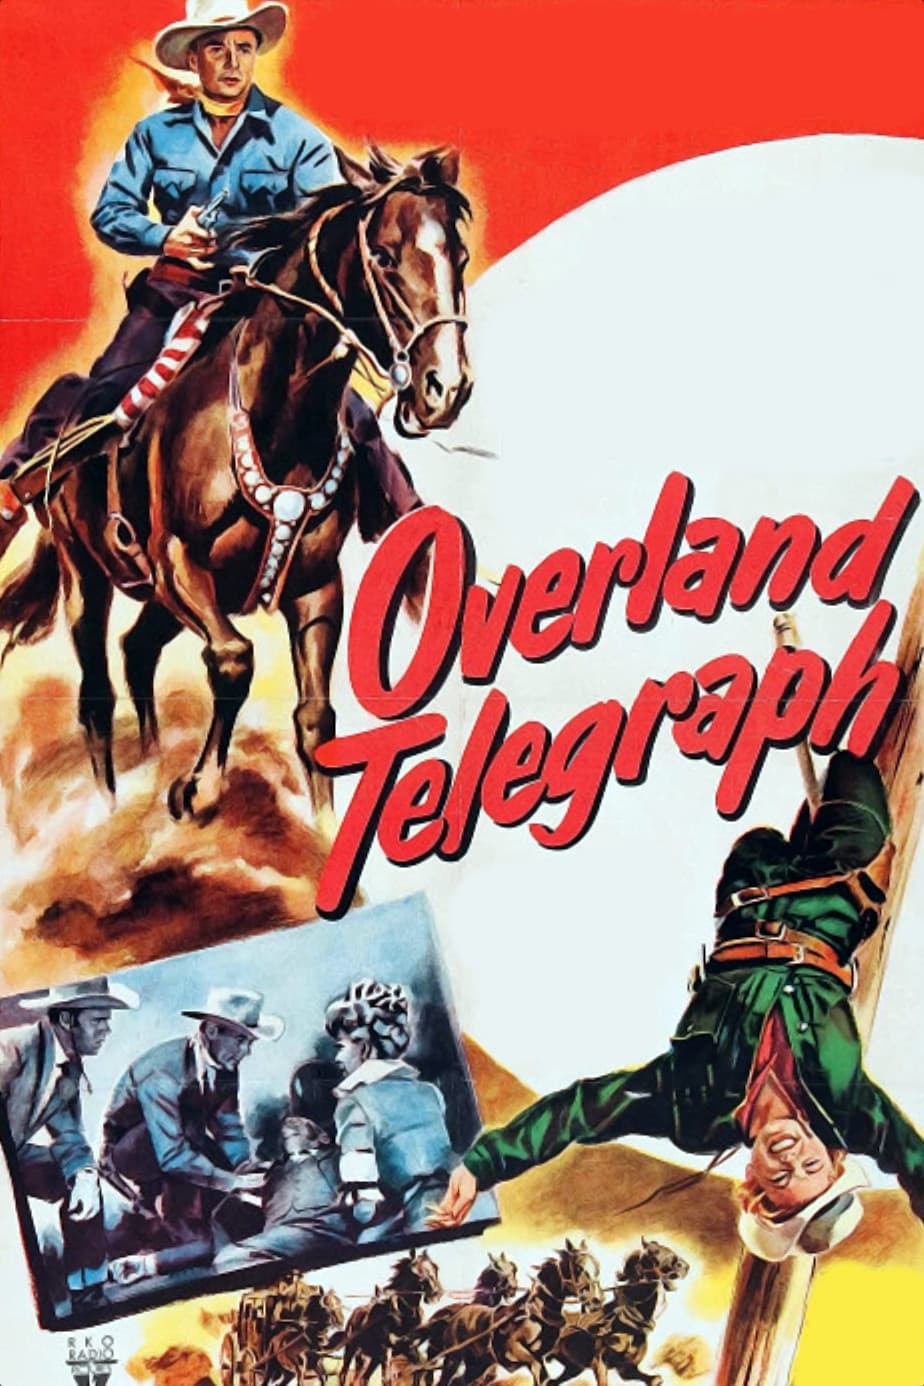 Overland Telegraph (1951)